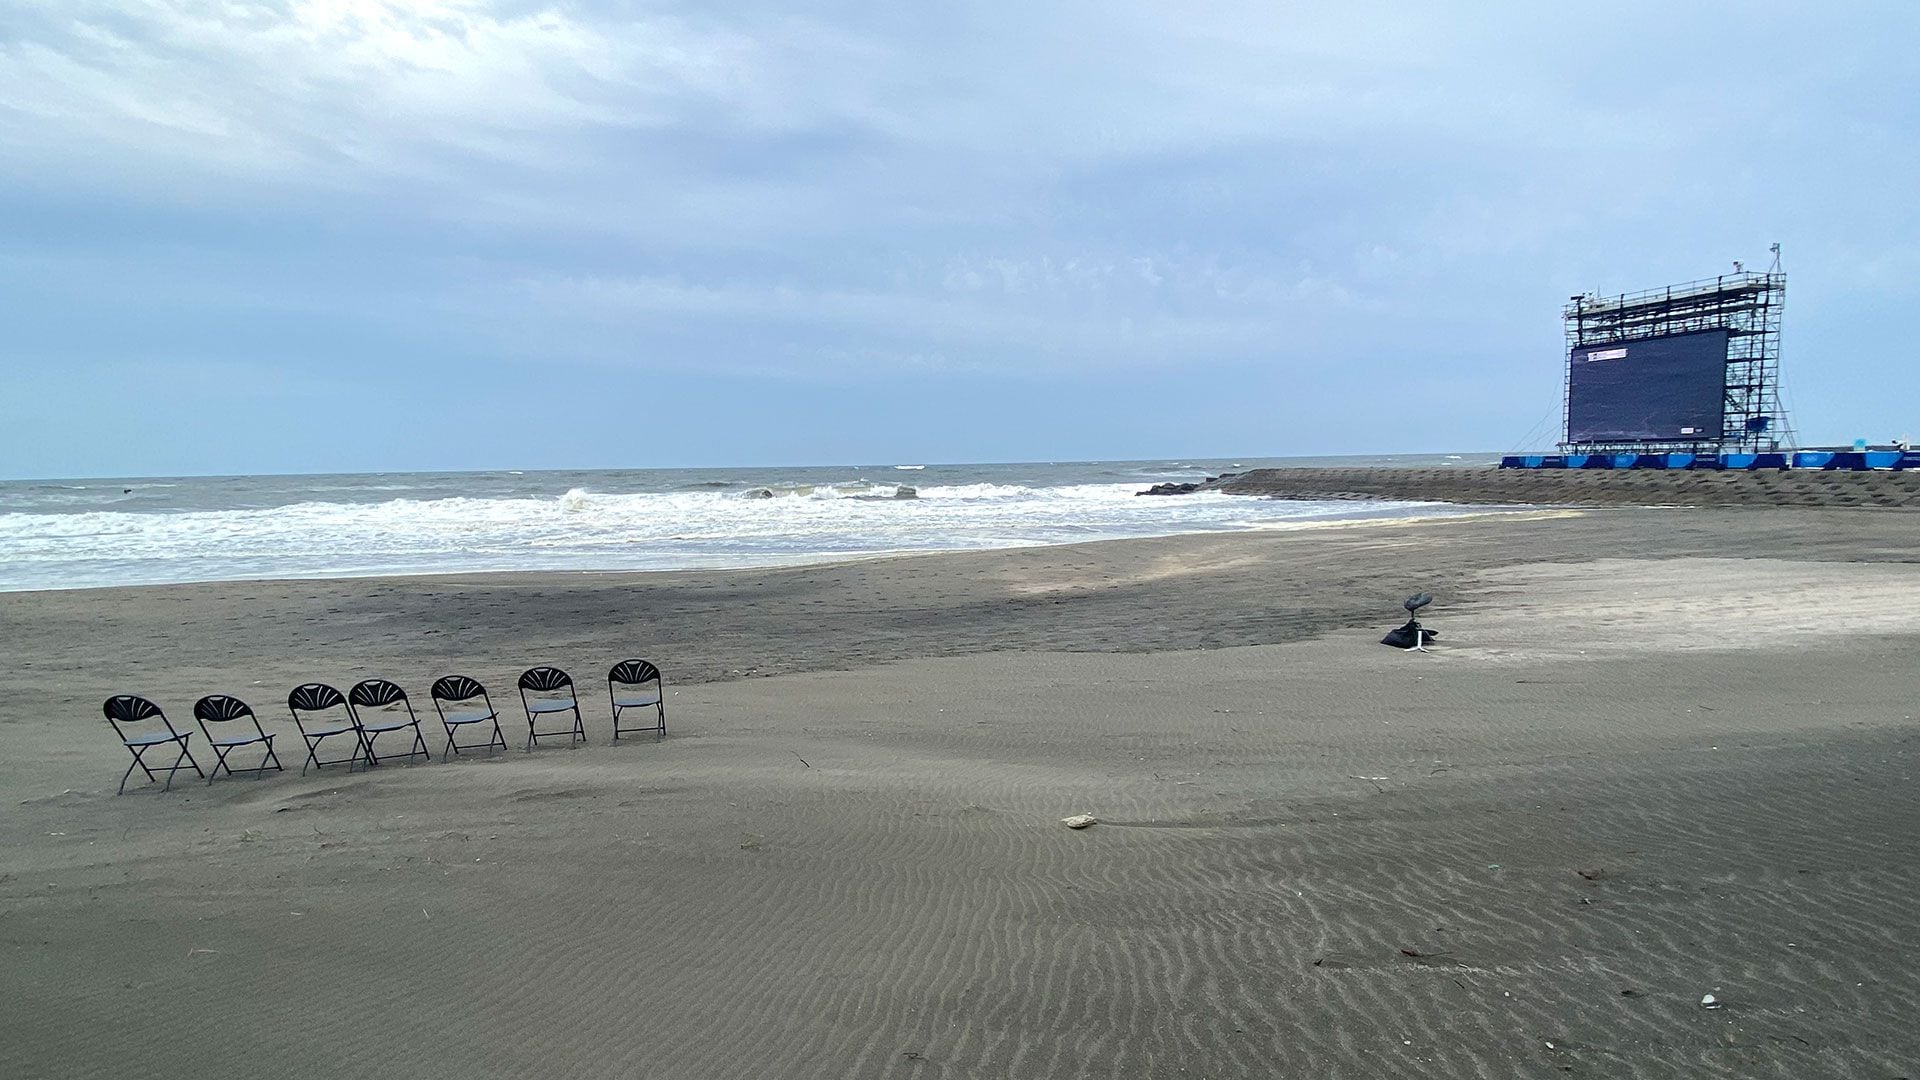 The emptiness of Tsurigasaki Surfing Beach